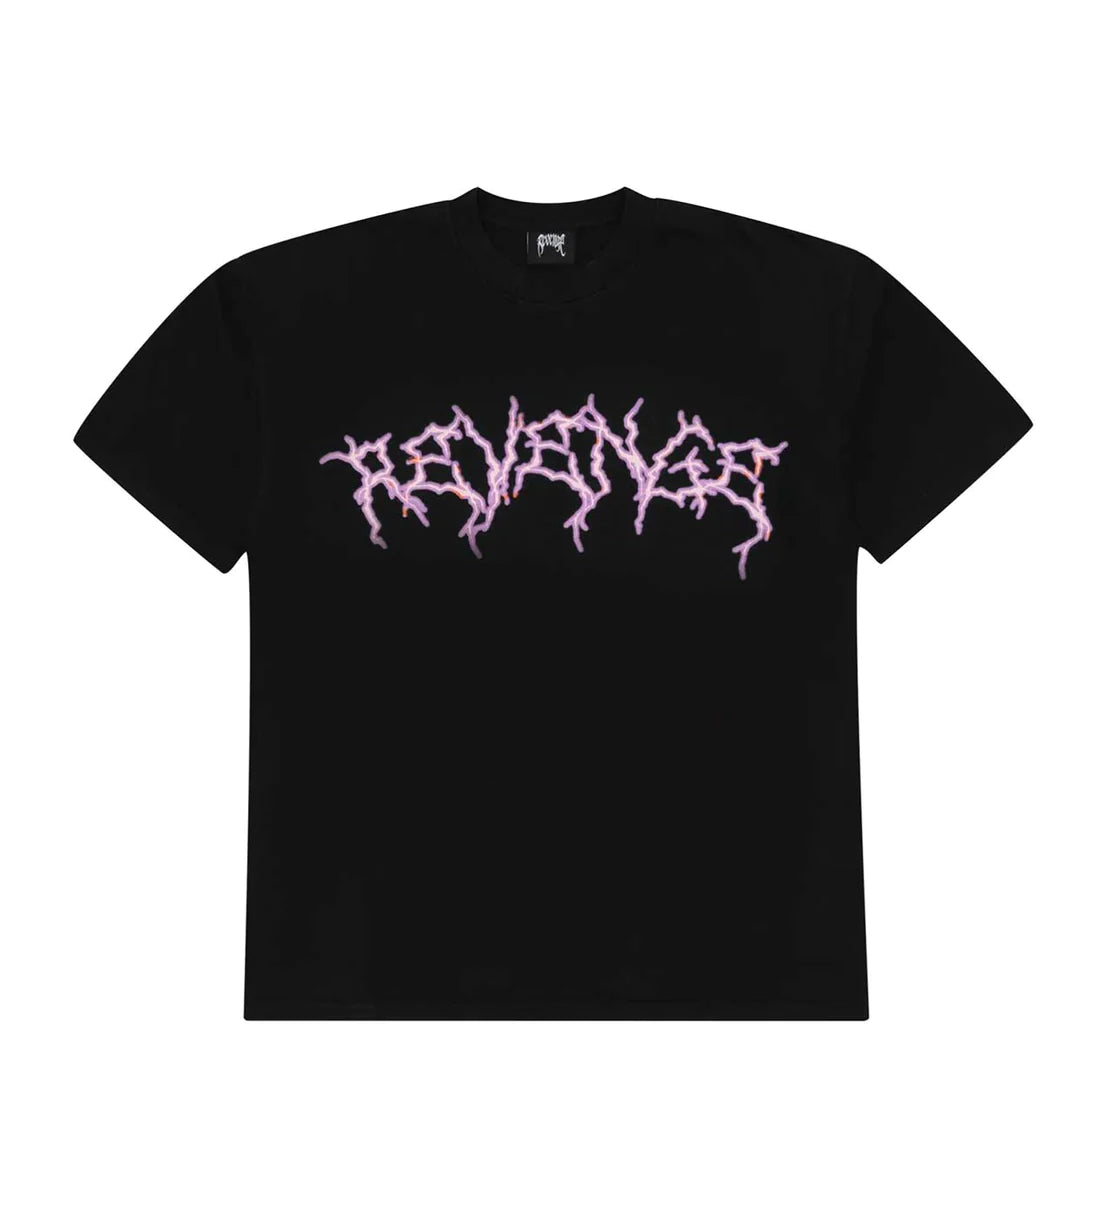 Revenge Lightning Anarchy T-Shirt Black